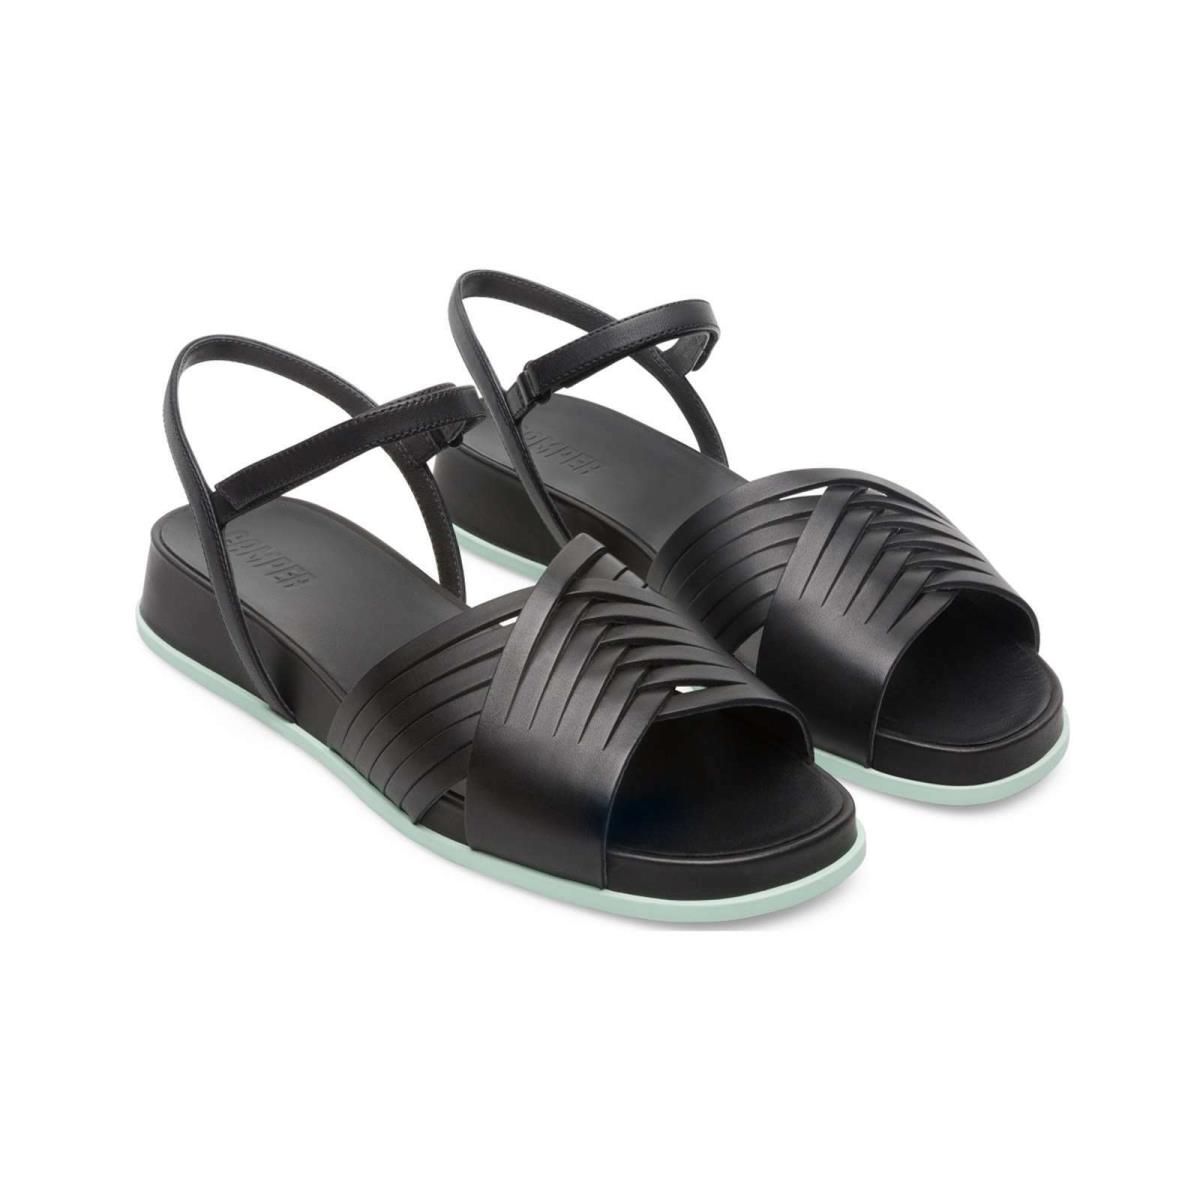 Camper Women s Atonik Shoes Leather Flat Open Toe Sandals